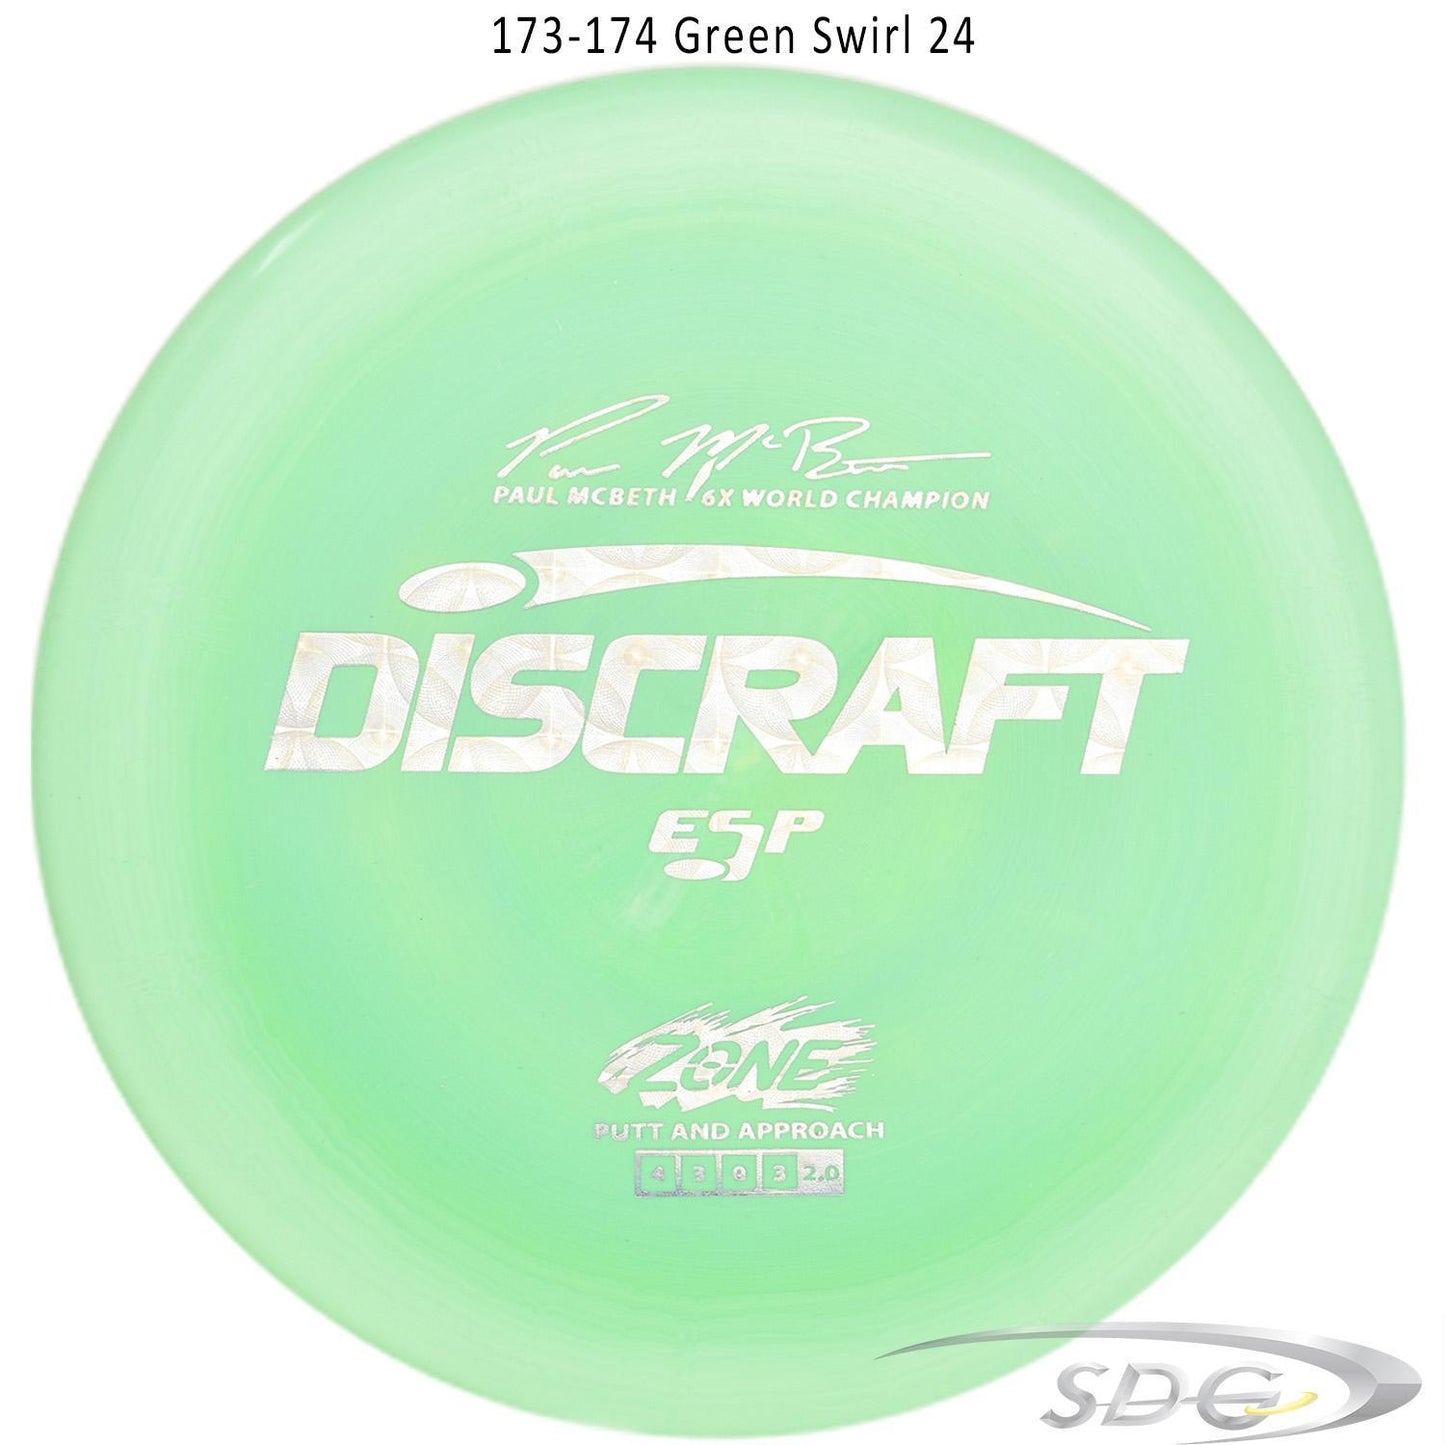 discraft-esp-zone-paul-mcbeth-signature-series-disc-golf-putter-176-173-weights 173-174 Green Swirl 24 